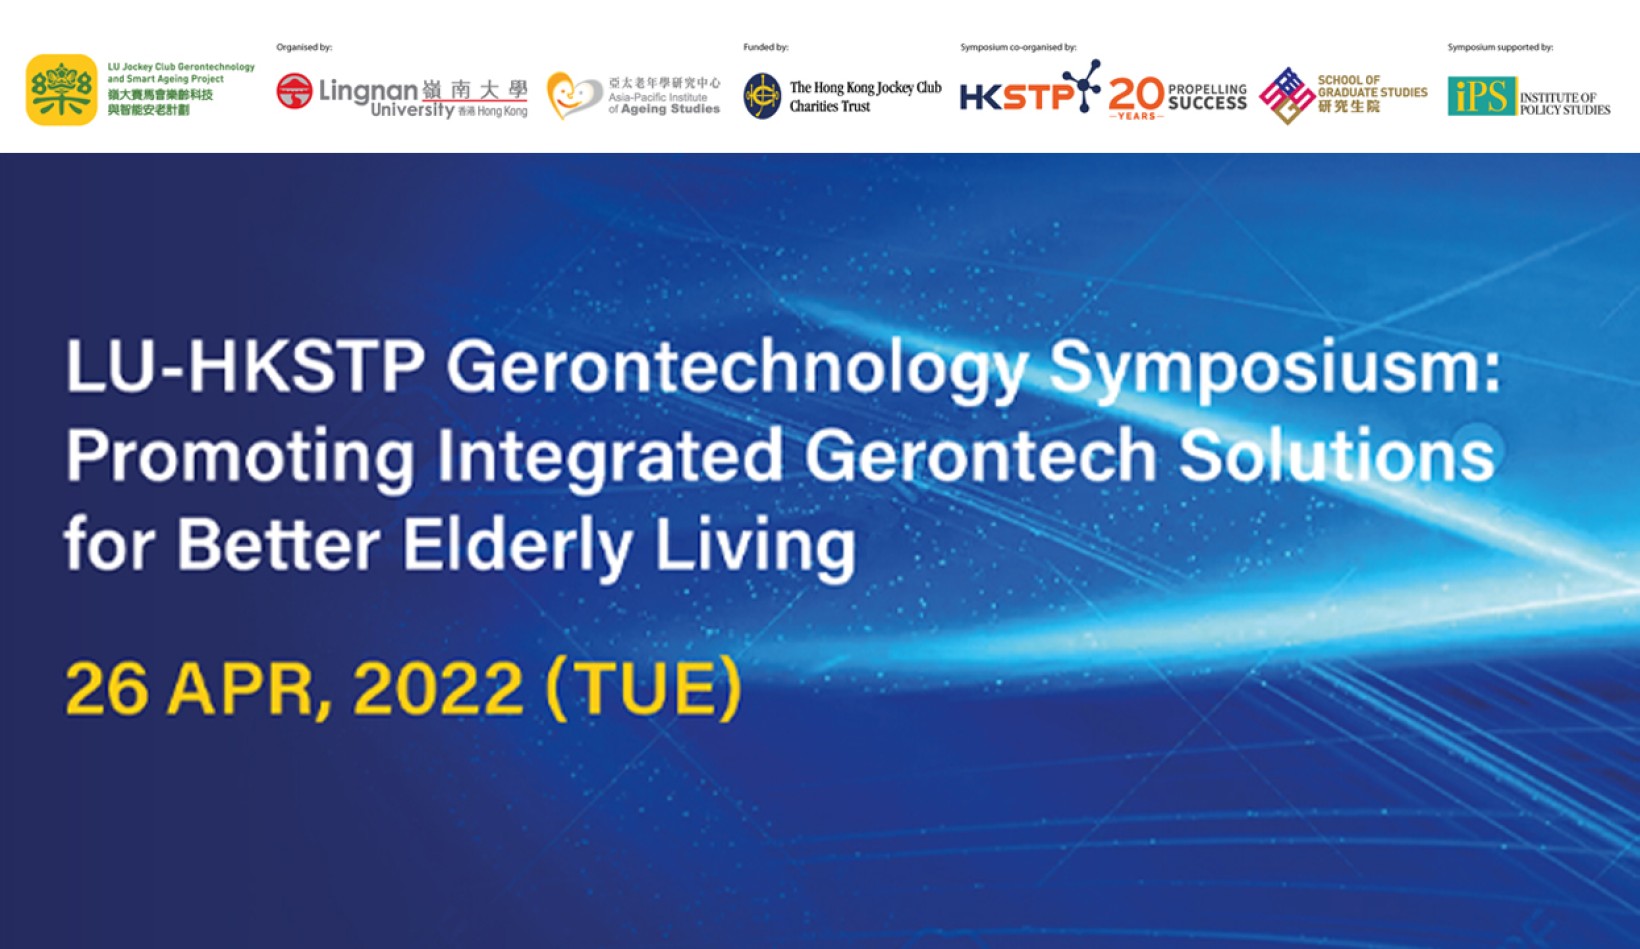 LU-HKSTP Gerontechnology Symposiusm: Promoting Integrated Gerontech Solutions for Better Elderly Living